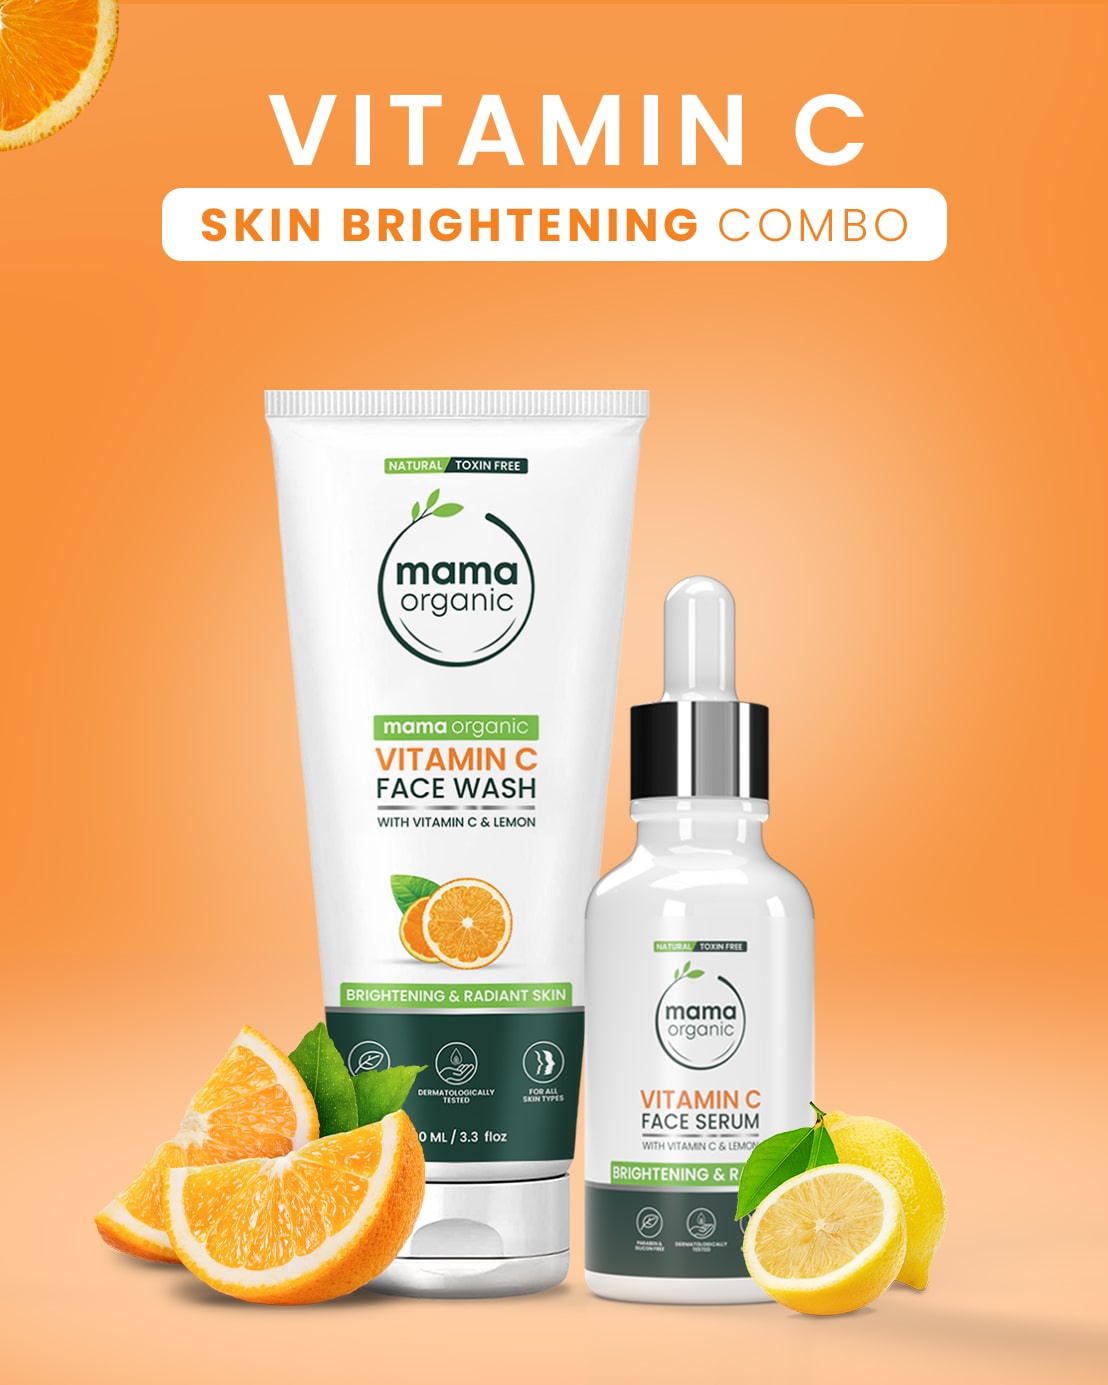 Vitamin C Skin Brightening Combo